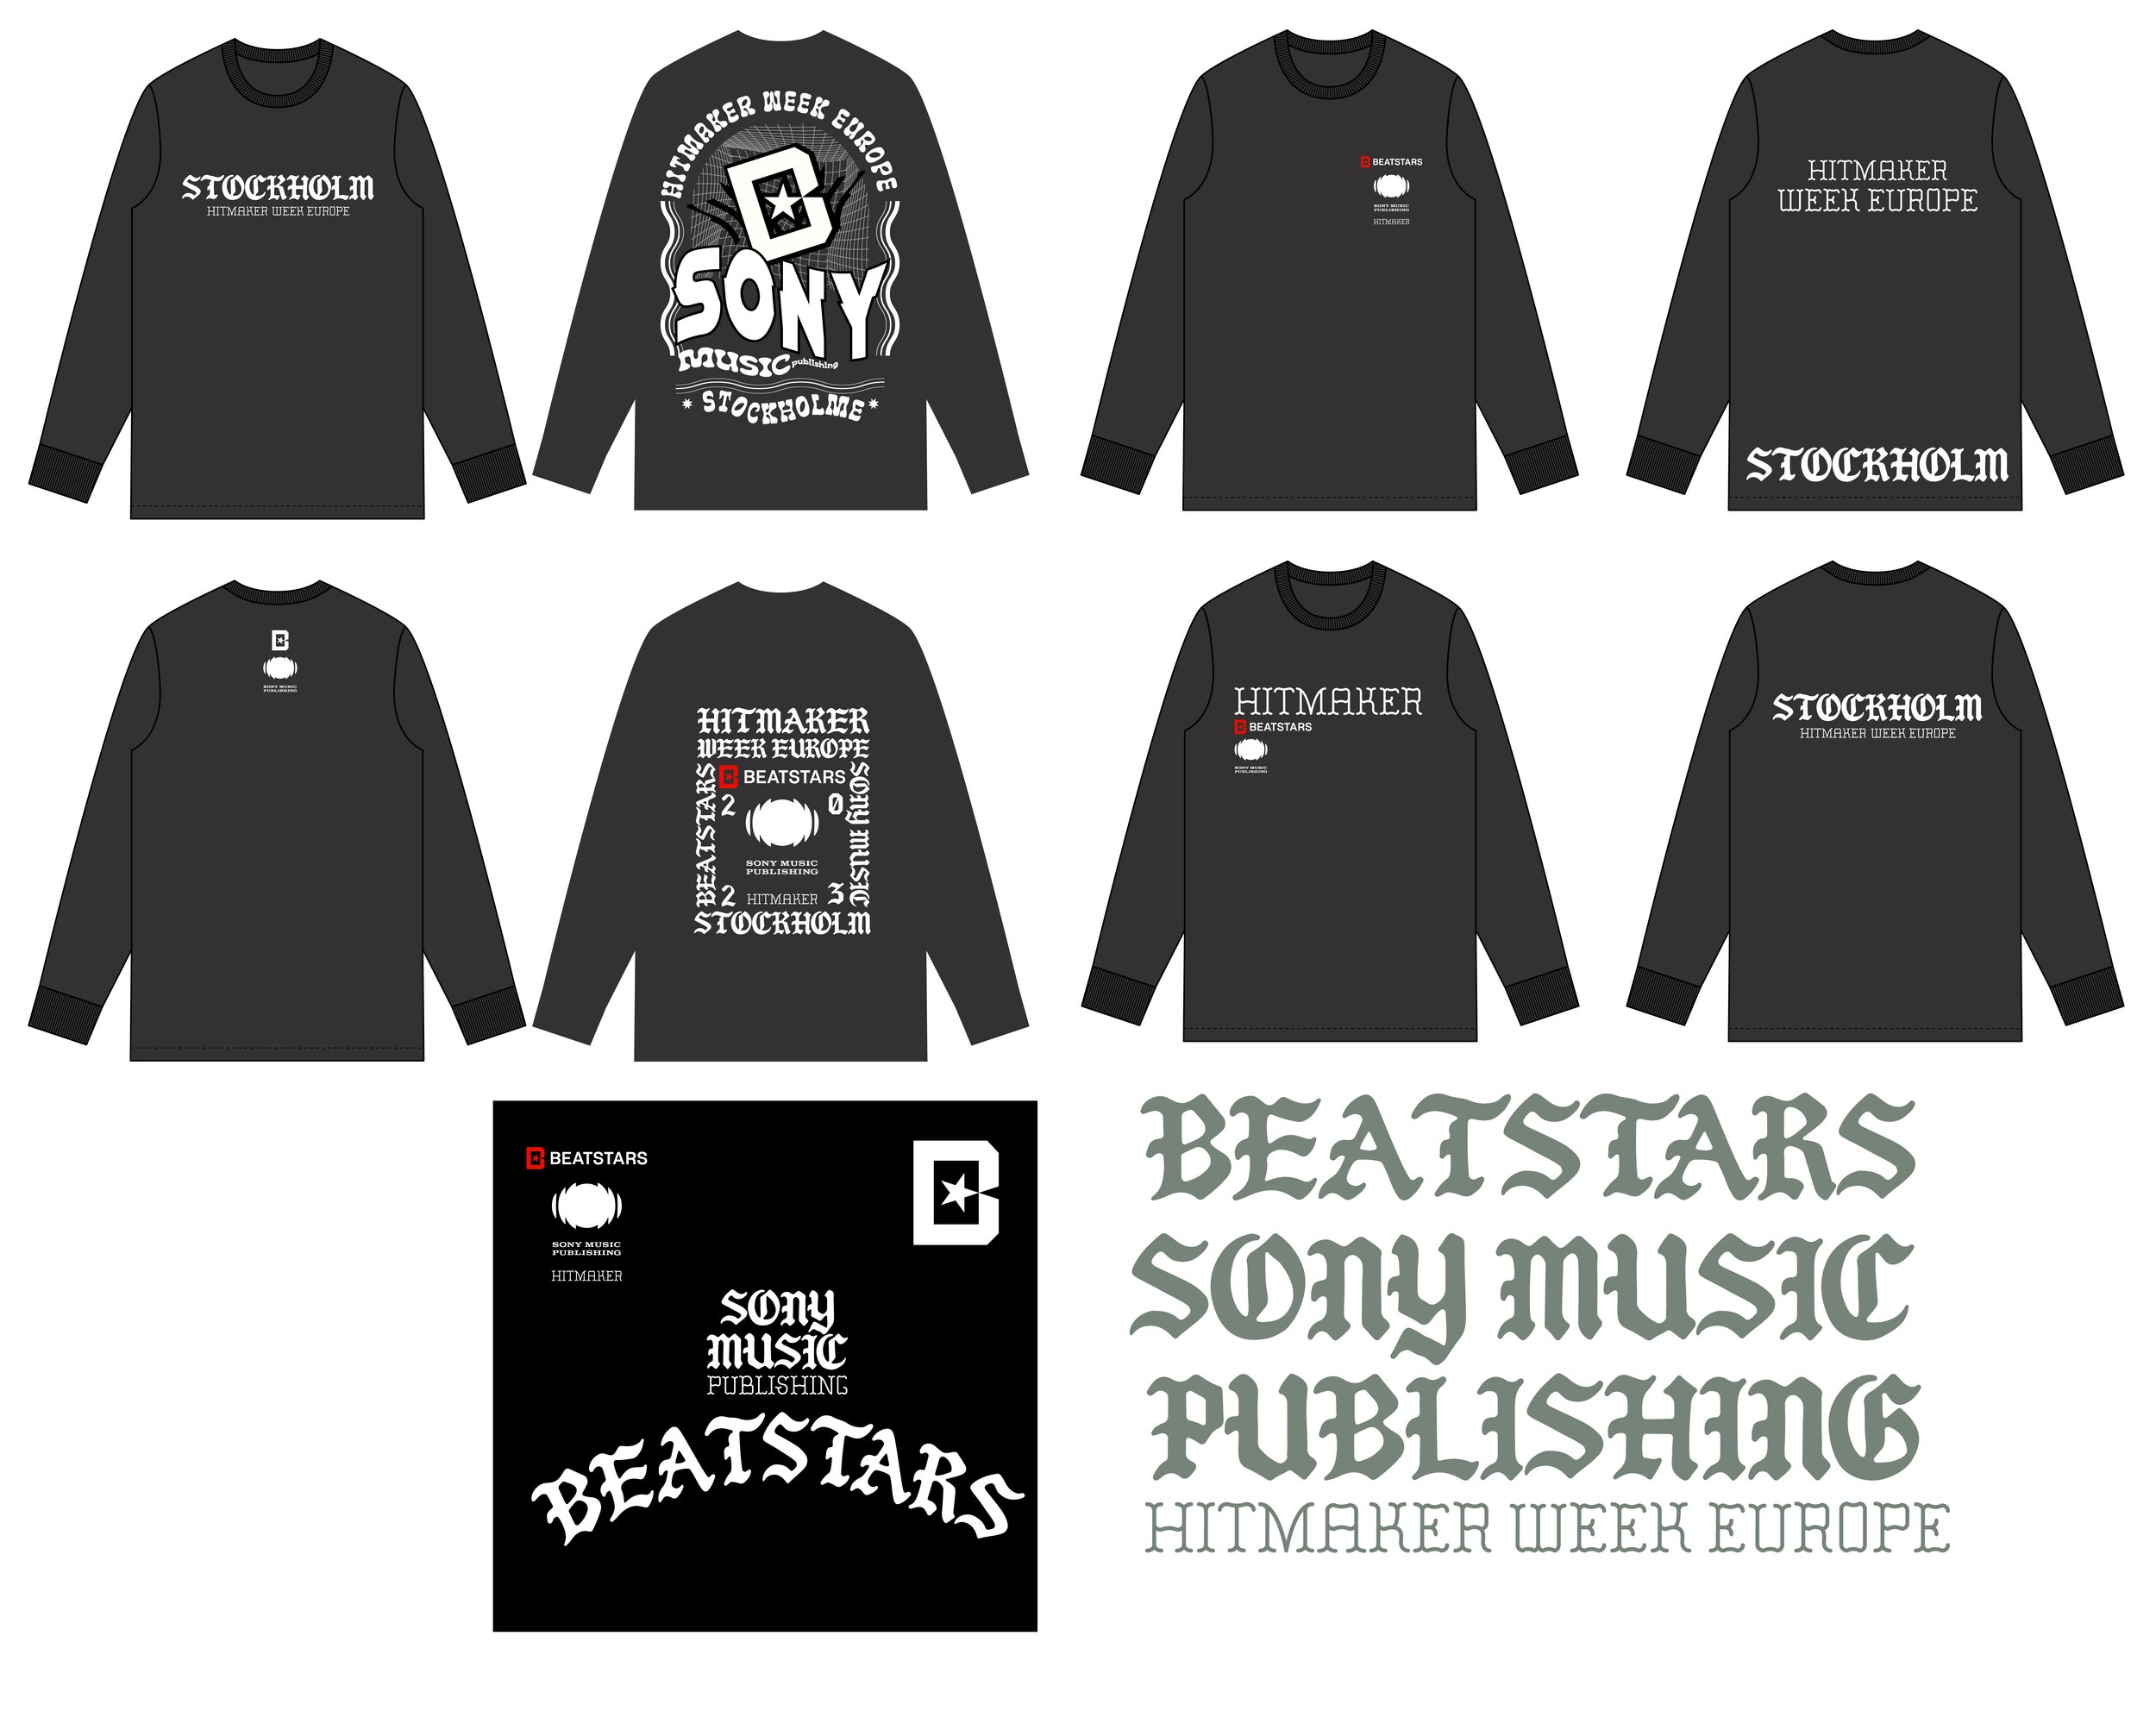 BeatStars x Sony Inspo (1).jpg